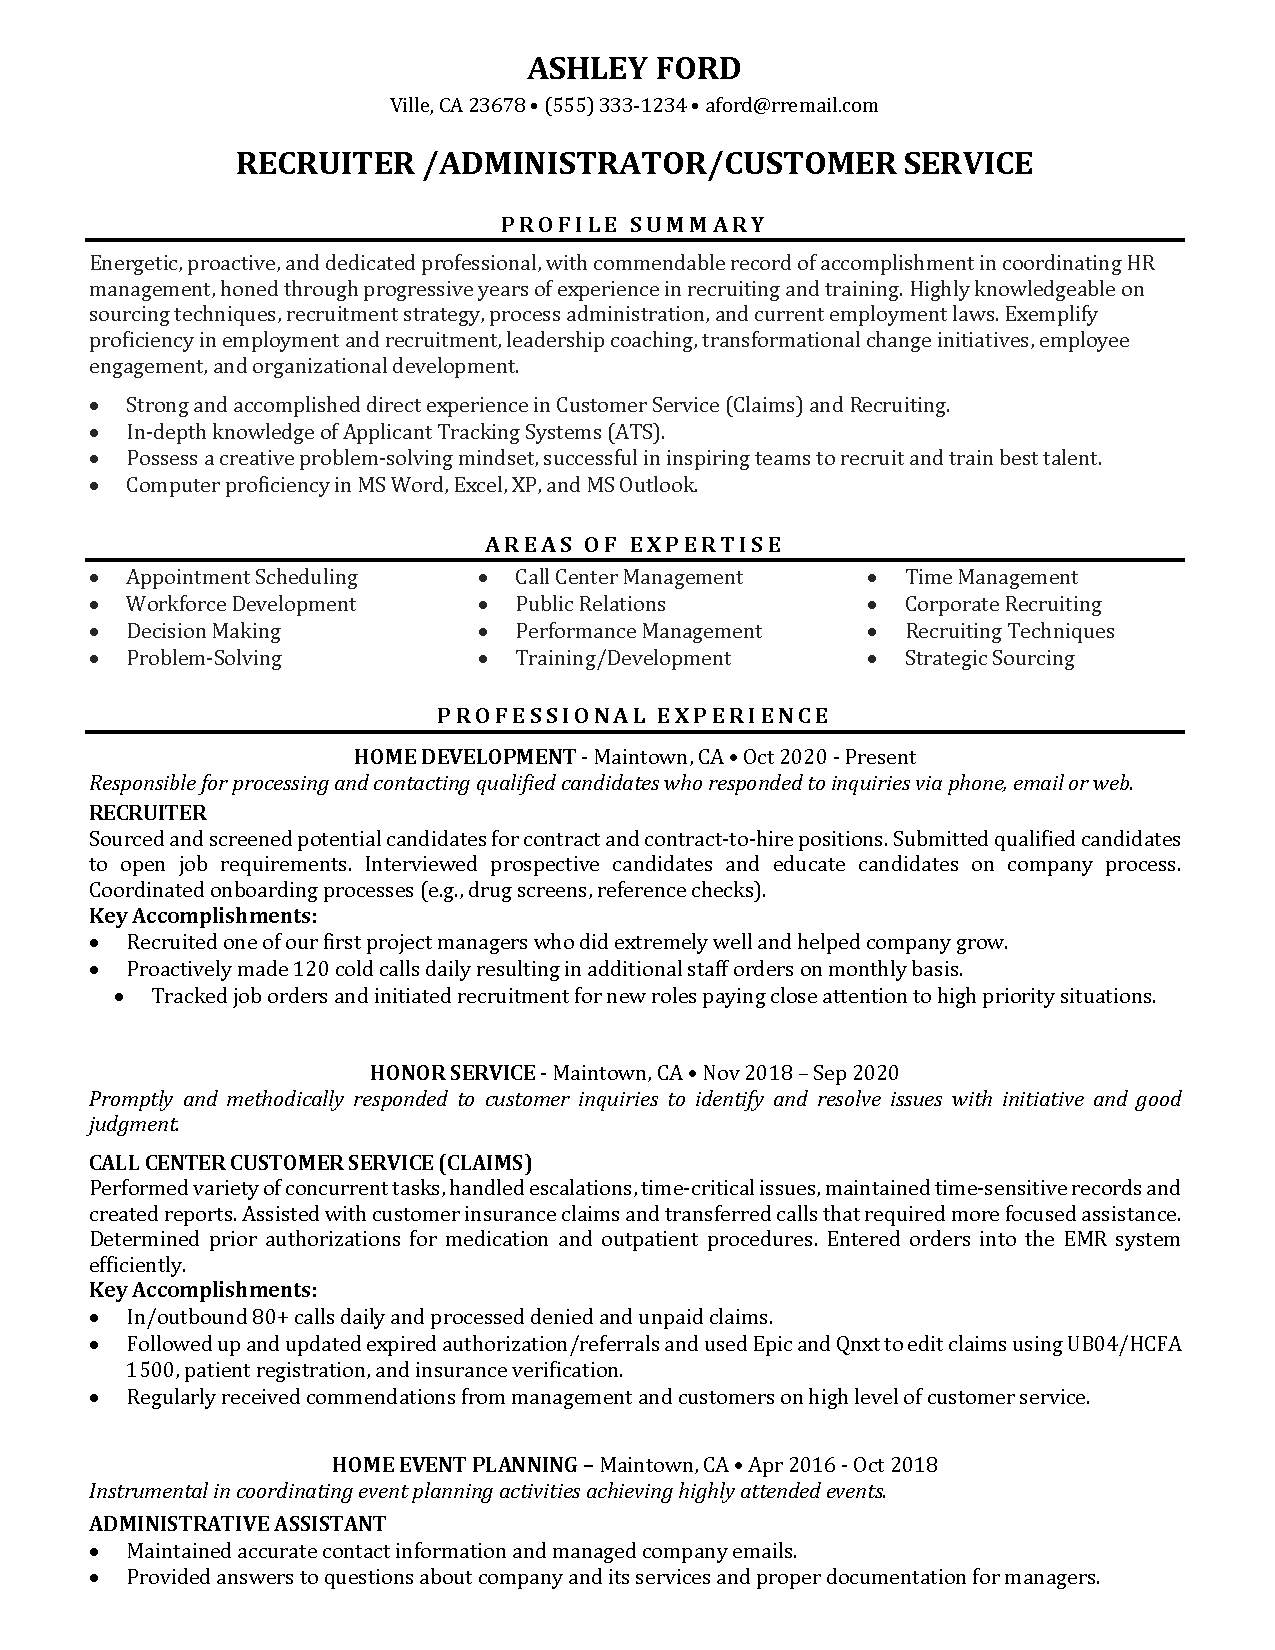 00020 recruiter resume example